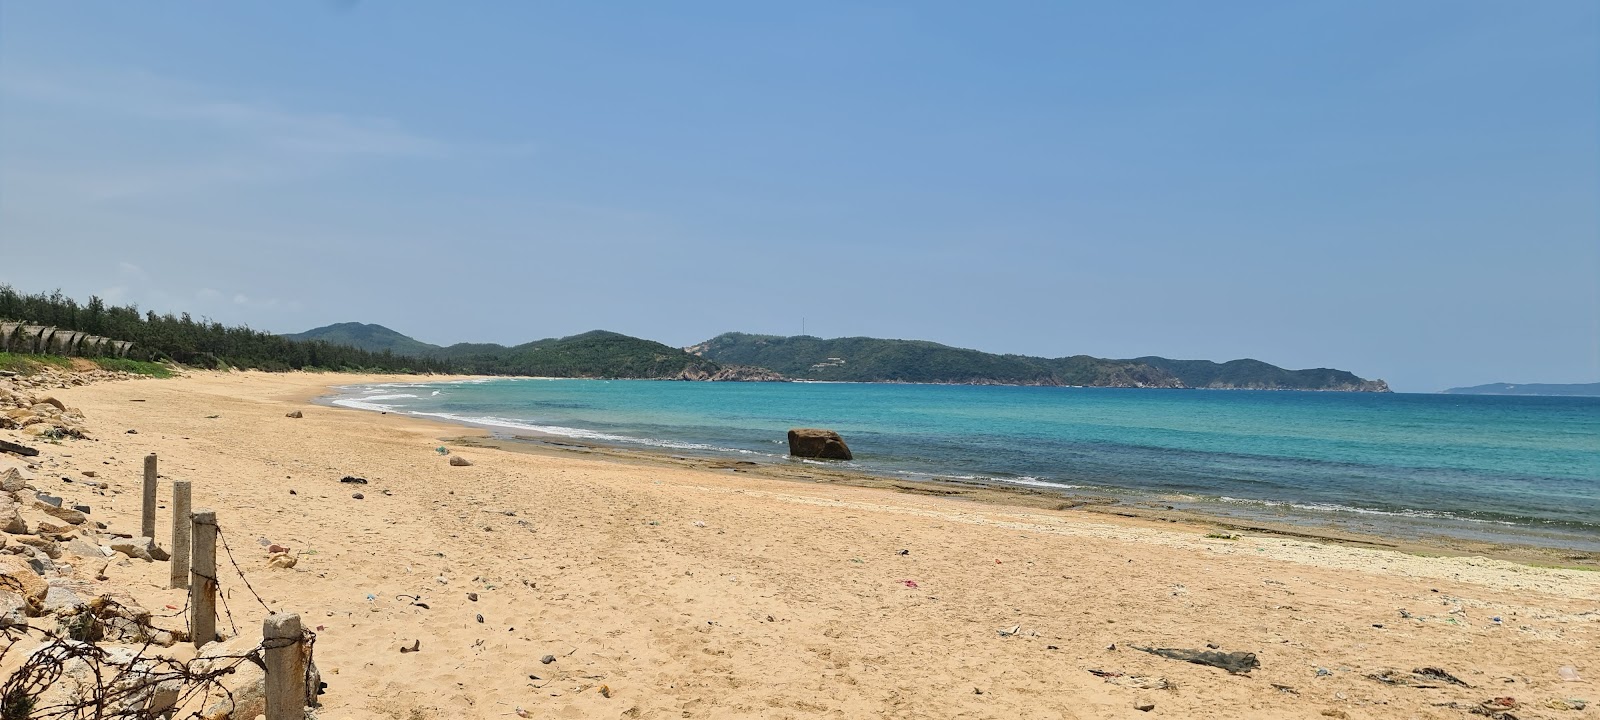 Photo de Hoa Thanh Beach avec baie spacieuse